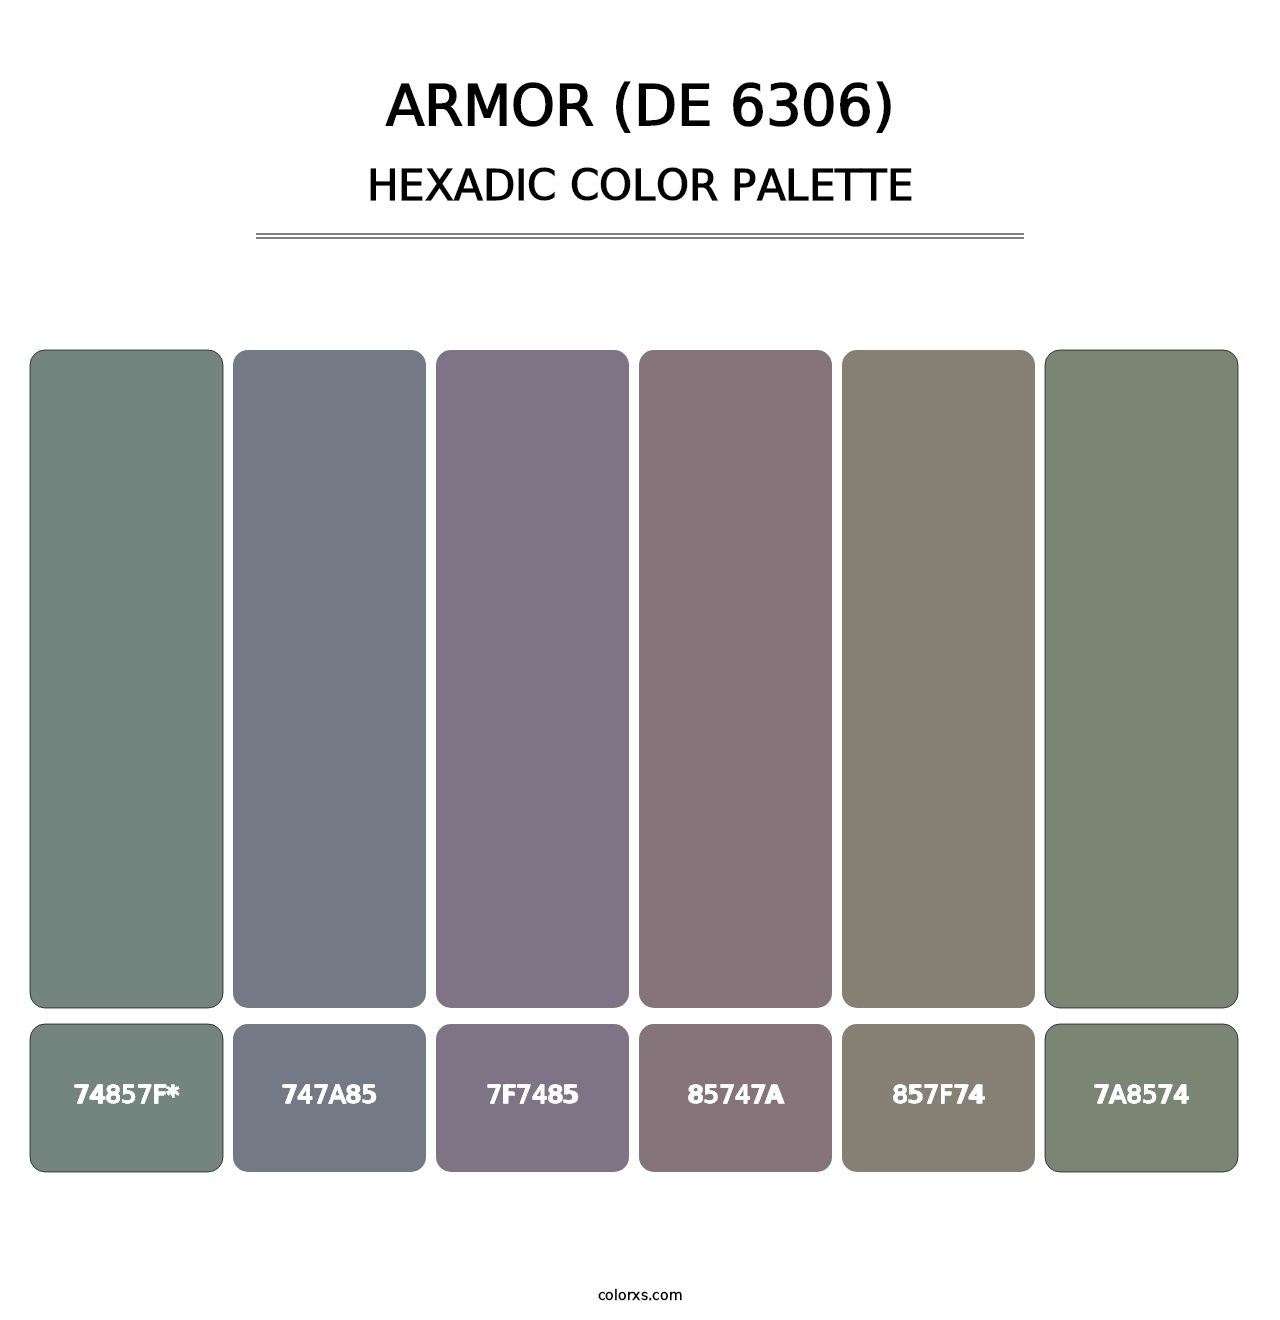 Armor (DE 6306) - Hexadic Color Palette